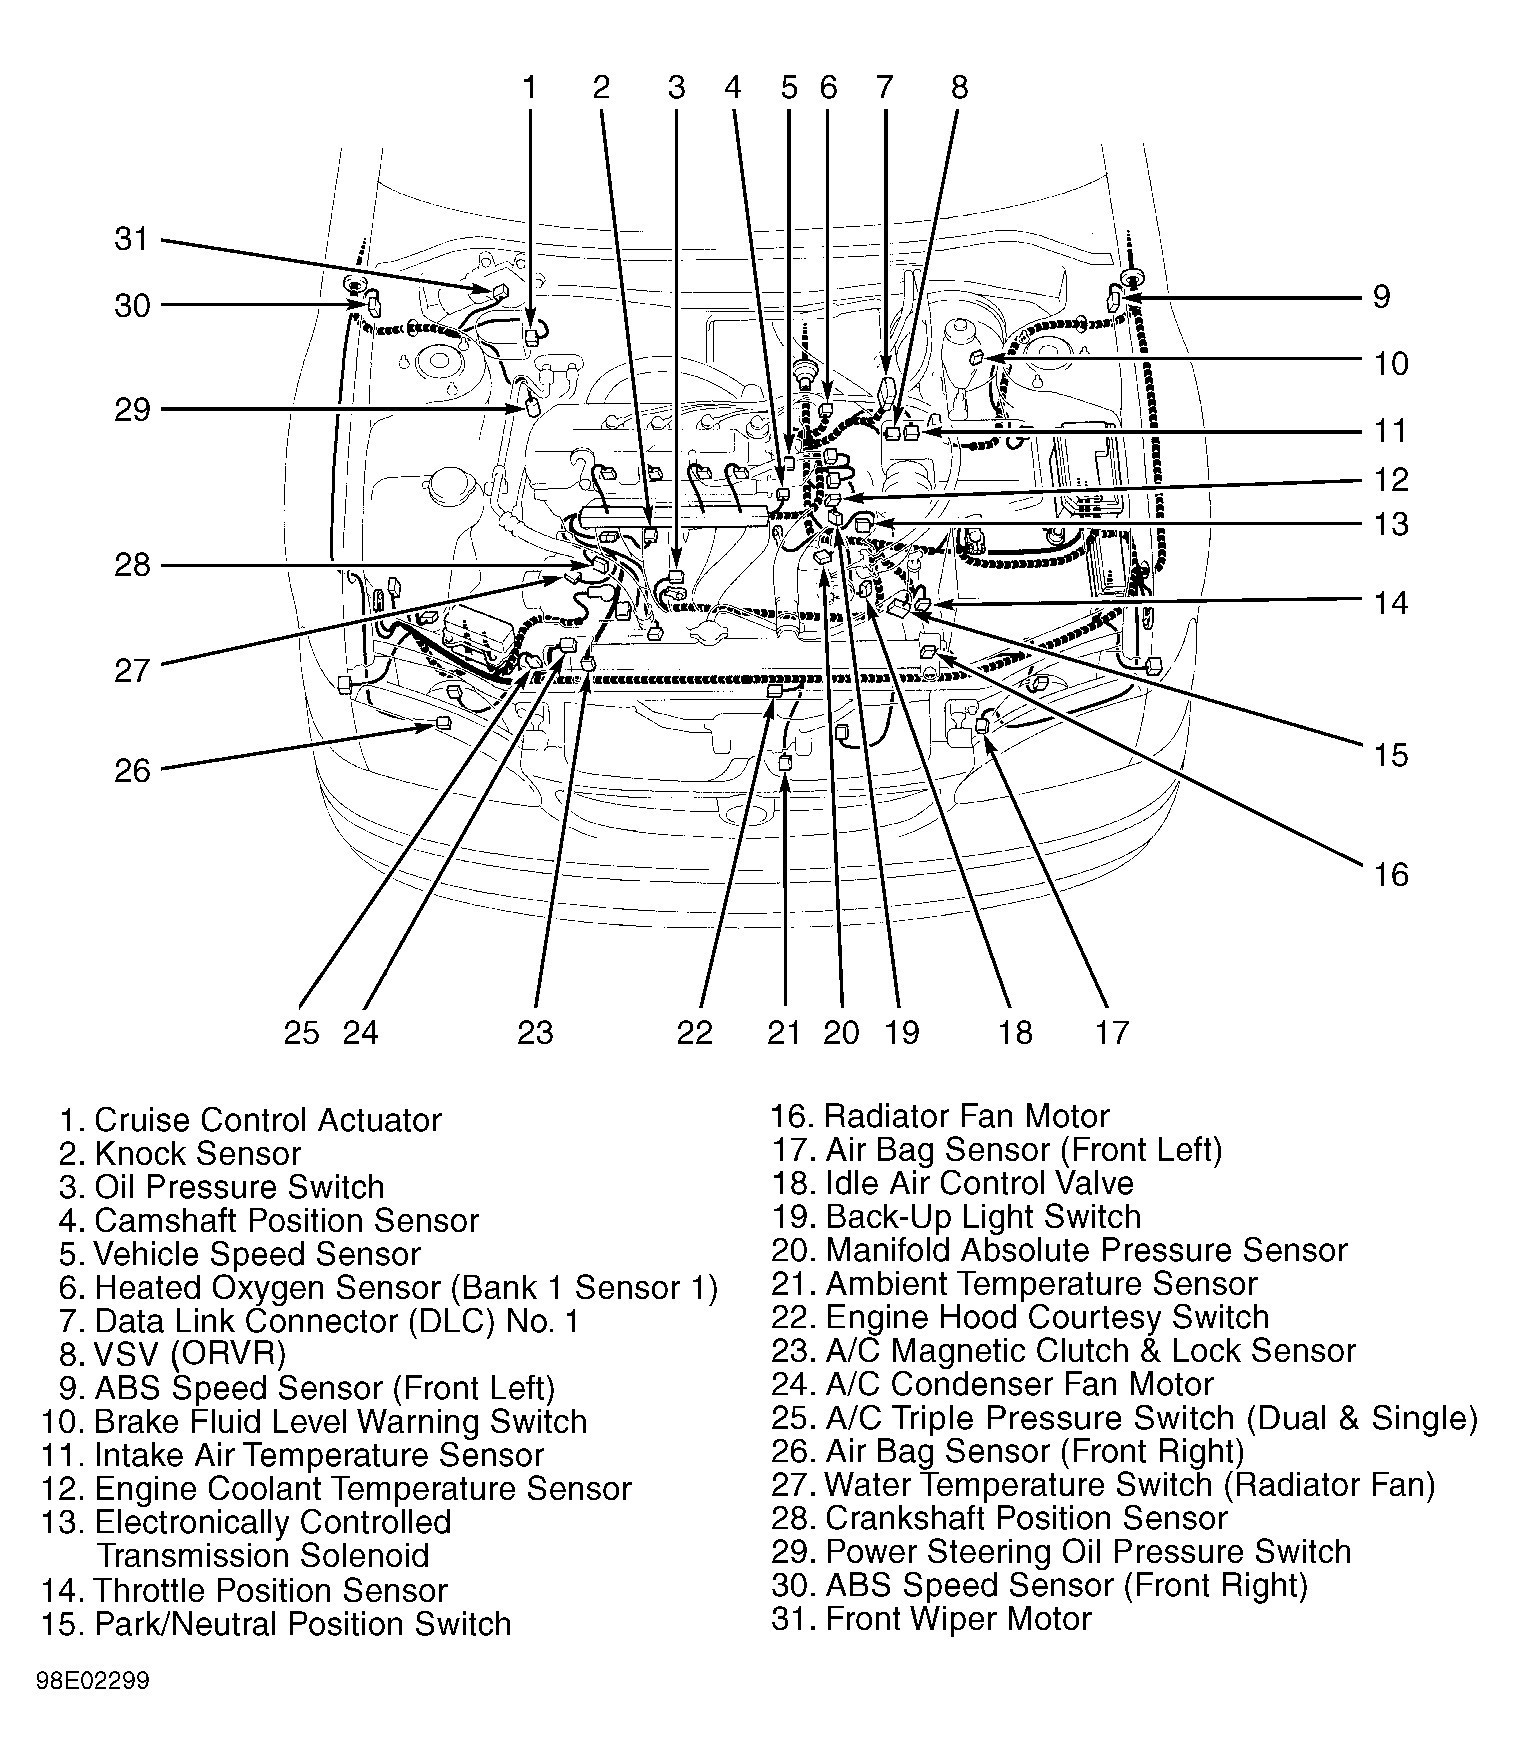 1995 toyota Tercel Engine Diagram 1997 toyota Corolla Engine Diagram Wiring Diagram Paper Of 1995 toyota Tercel Engine Diagram